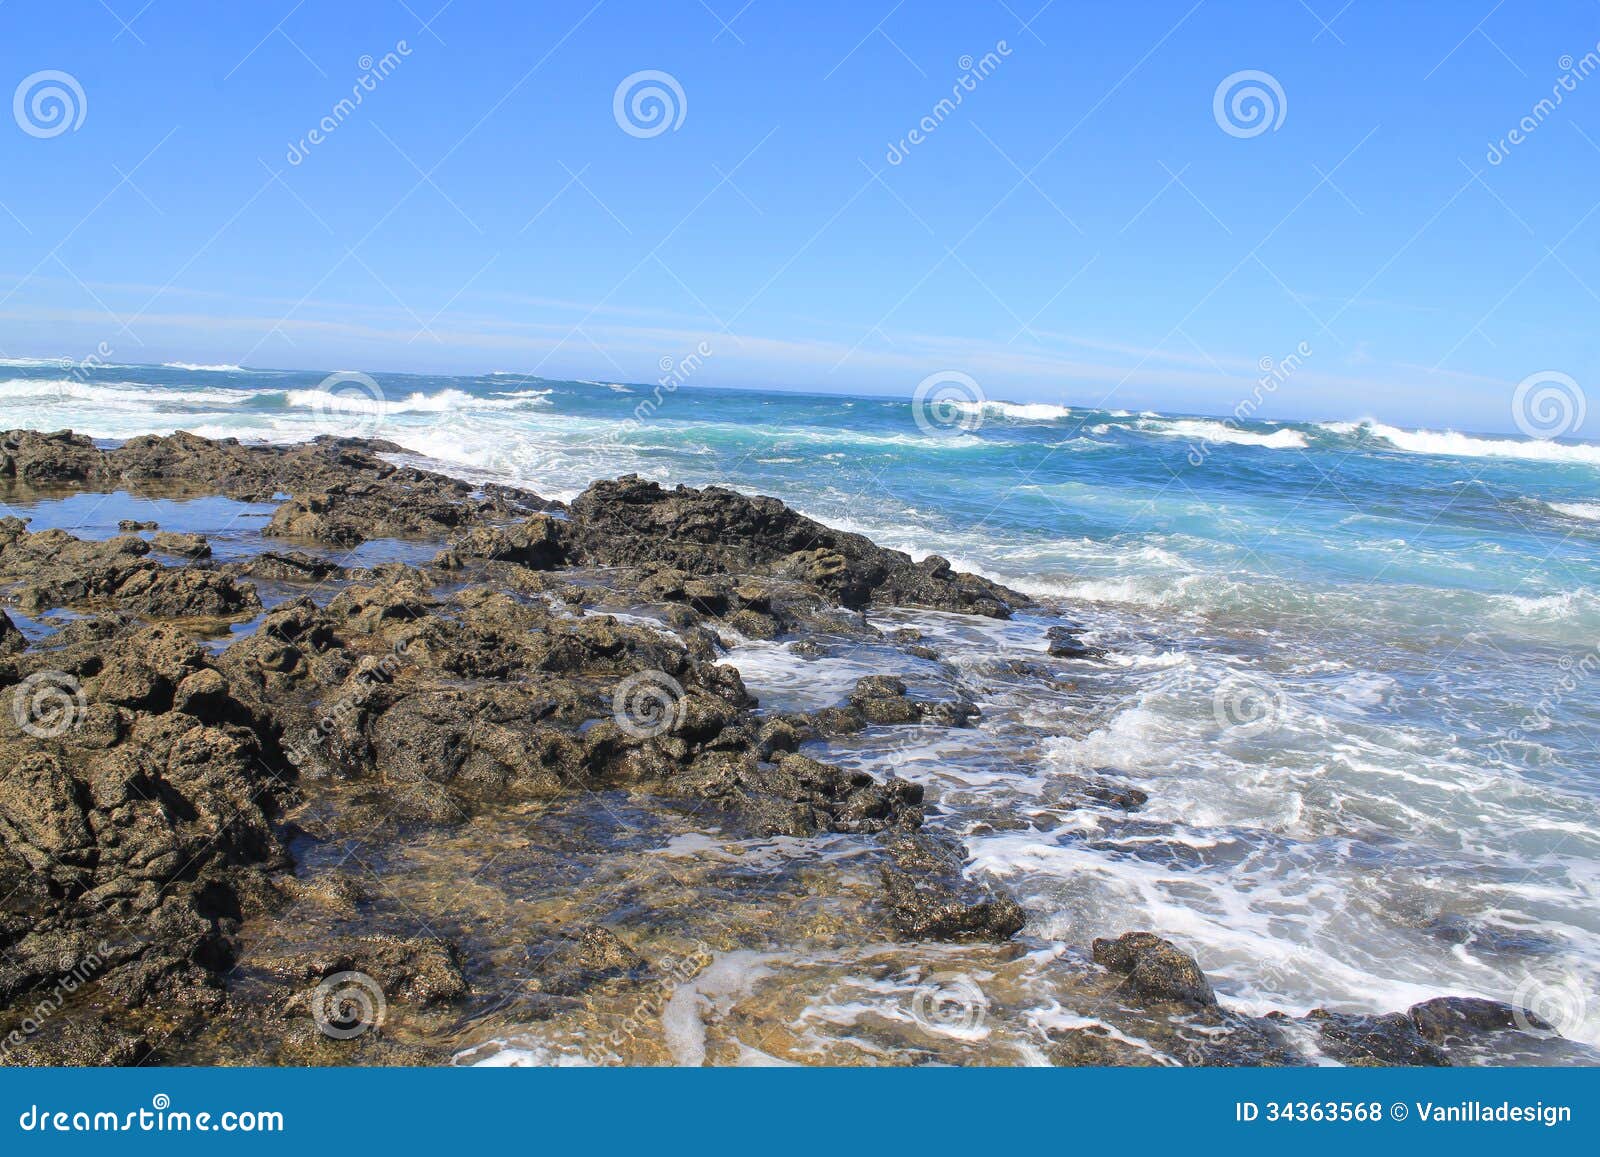 turbulent ocean waves with white foam beat coastal stones, fuerteventura, canary islands at la pared